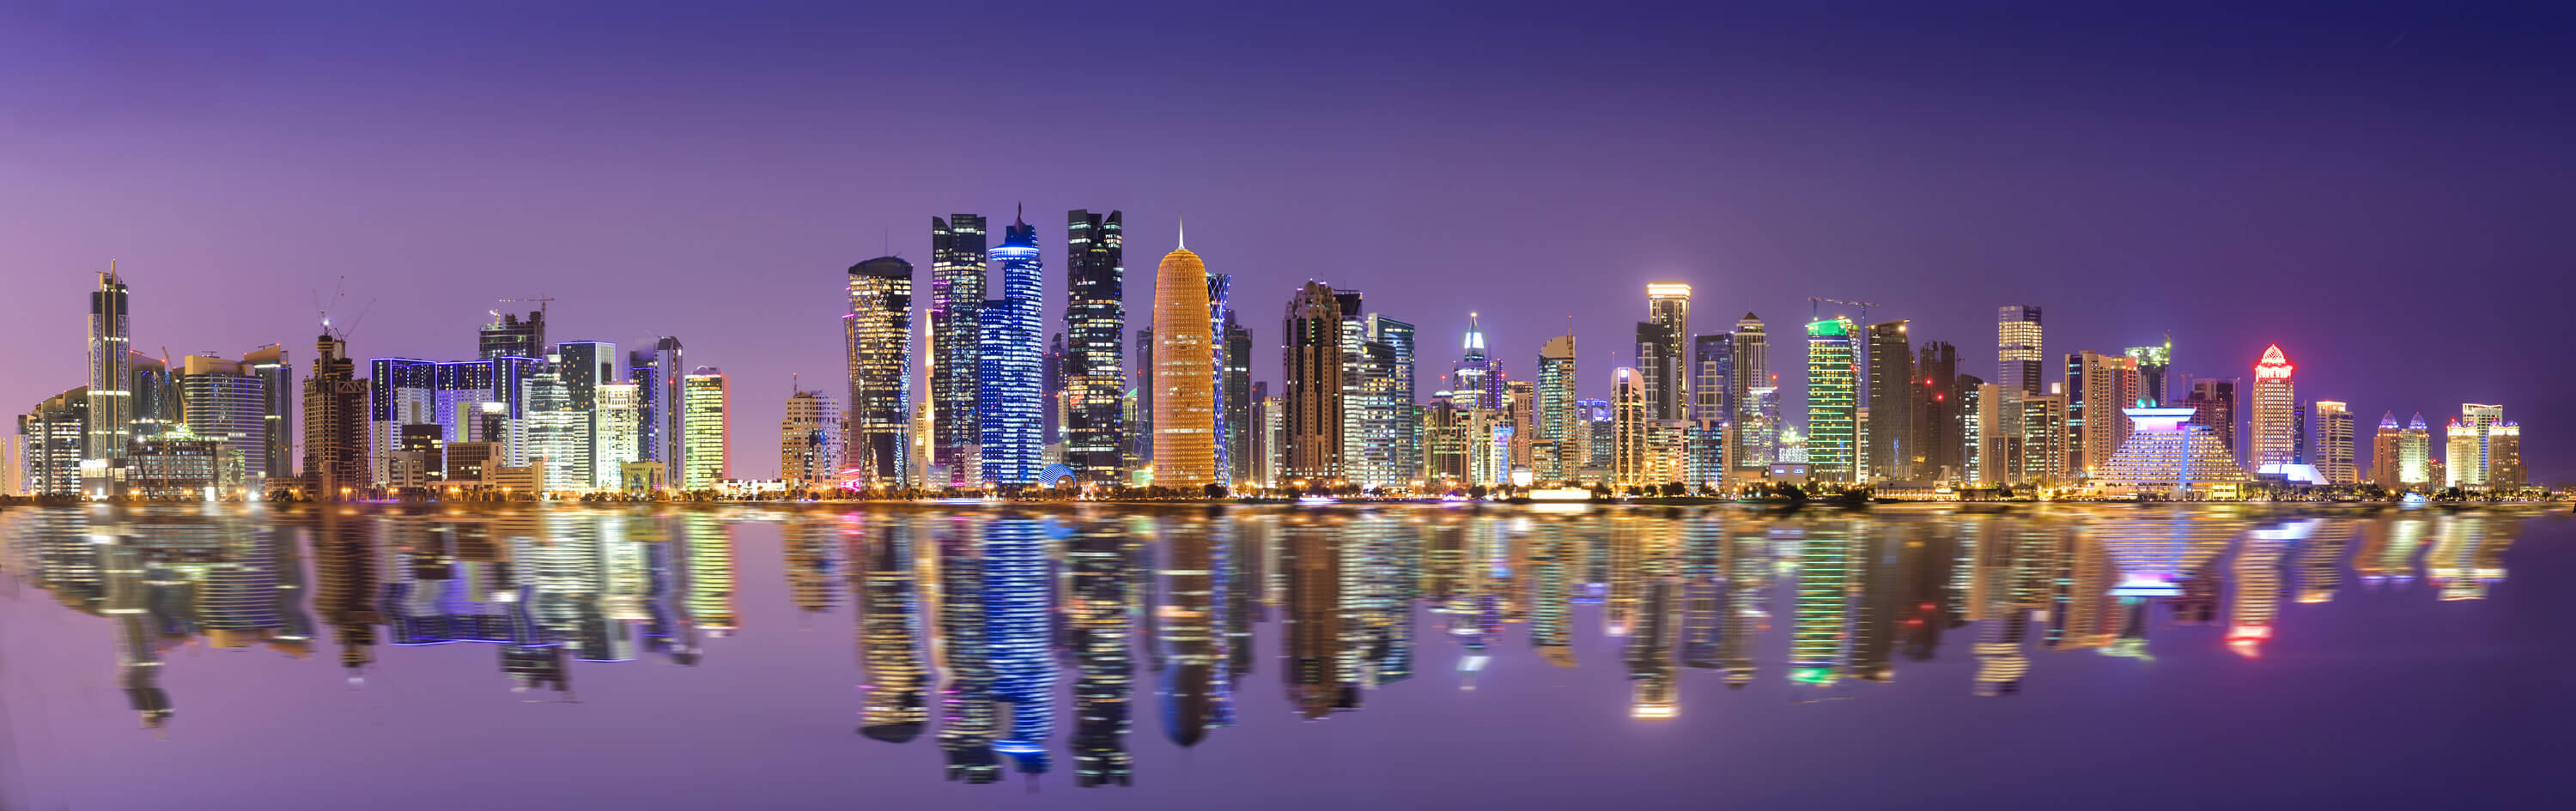 Doha, Qatar in the night